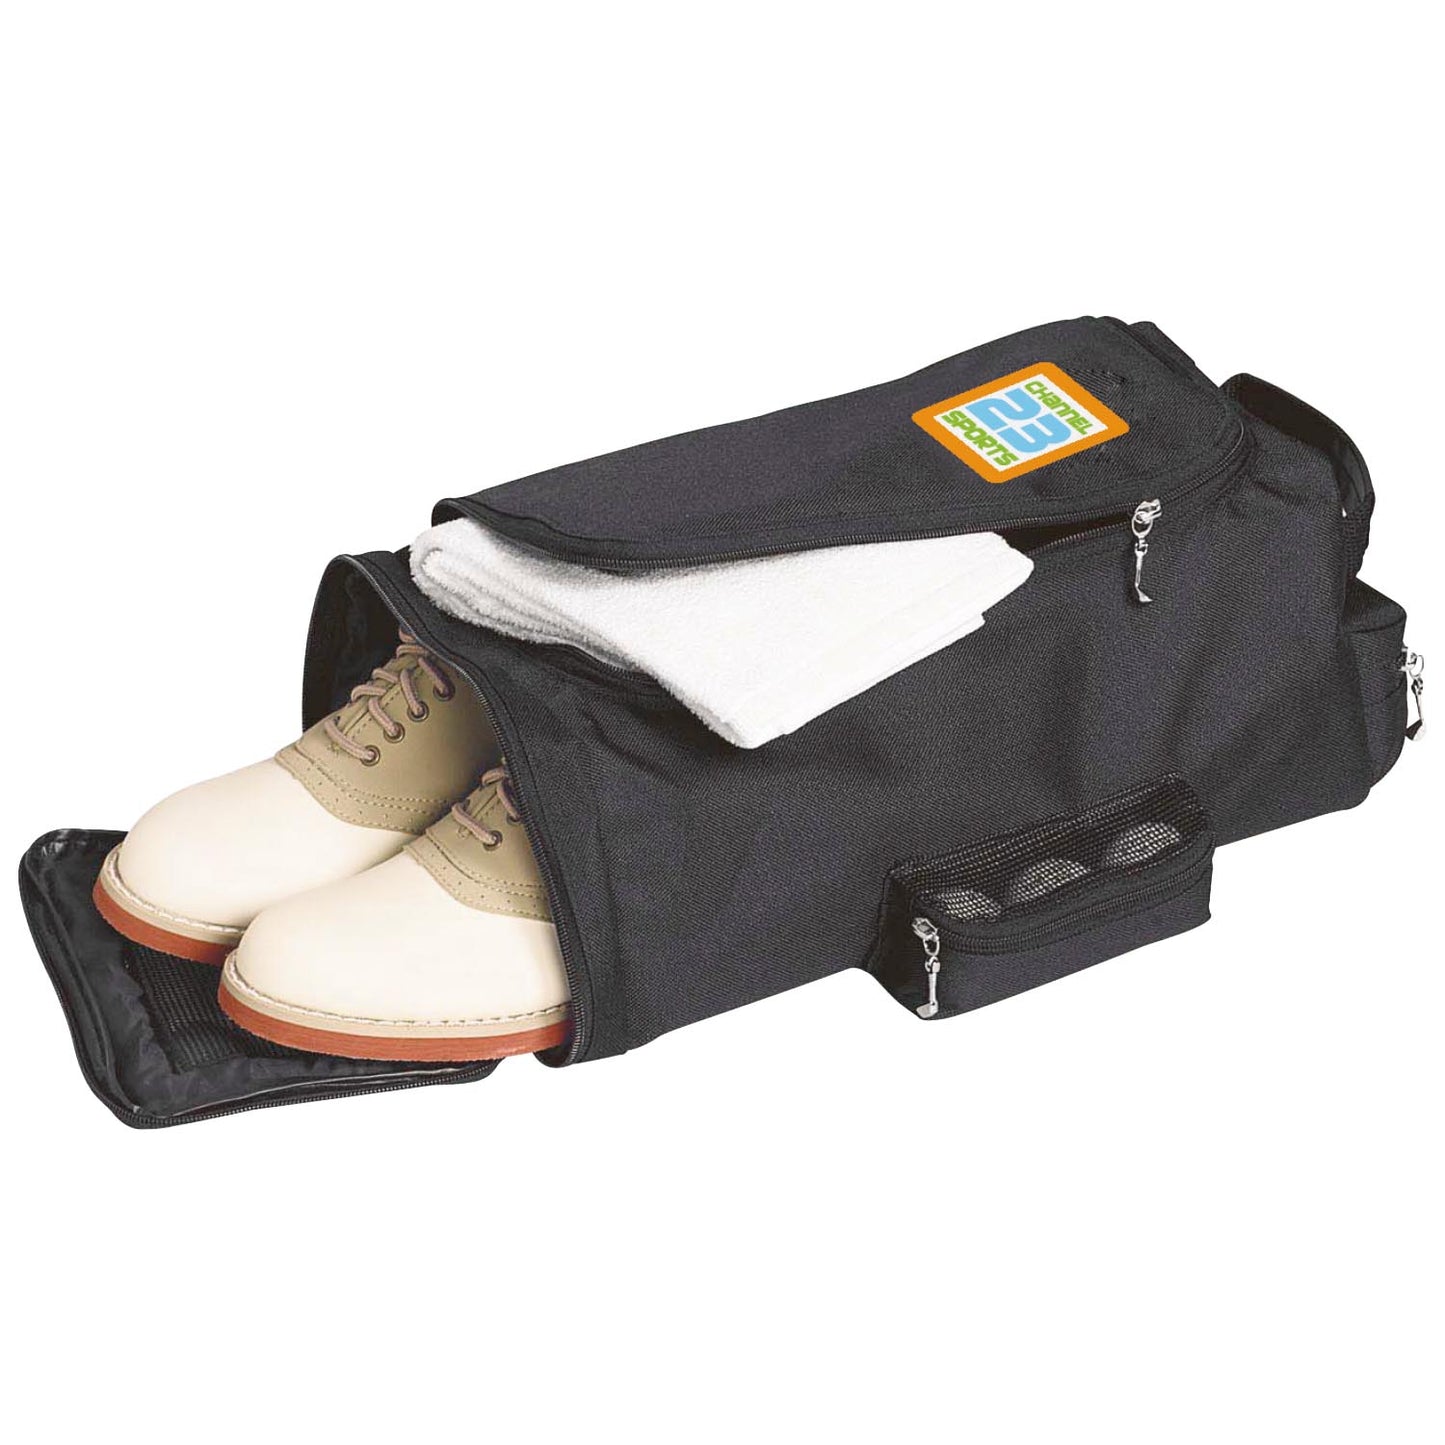 Golfer’s Travel Shoe Bag